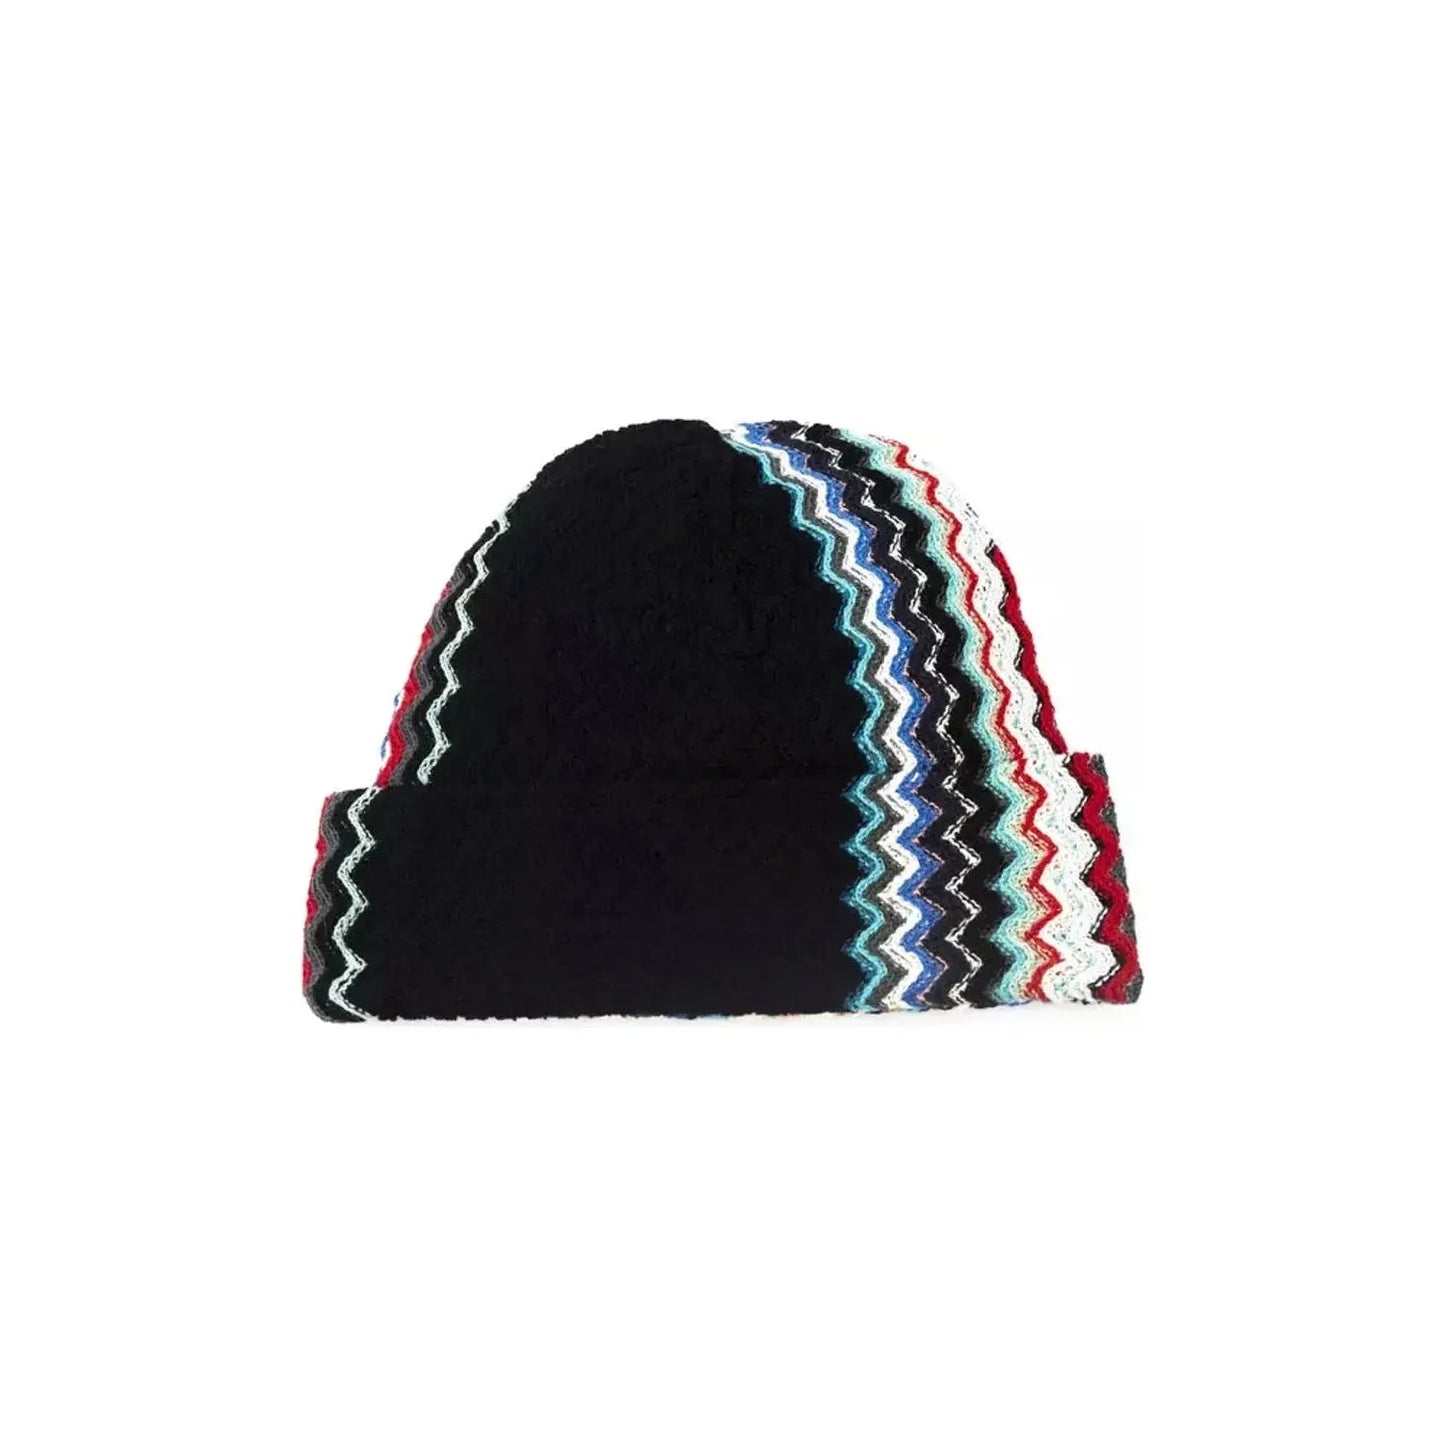 Missoni Geometric Fantasy Multicolor Wool Blend Hat multicolor-wool-hats-cap product-22438-982109940-23-7f63b310-ba8.webp